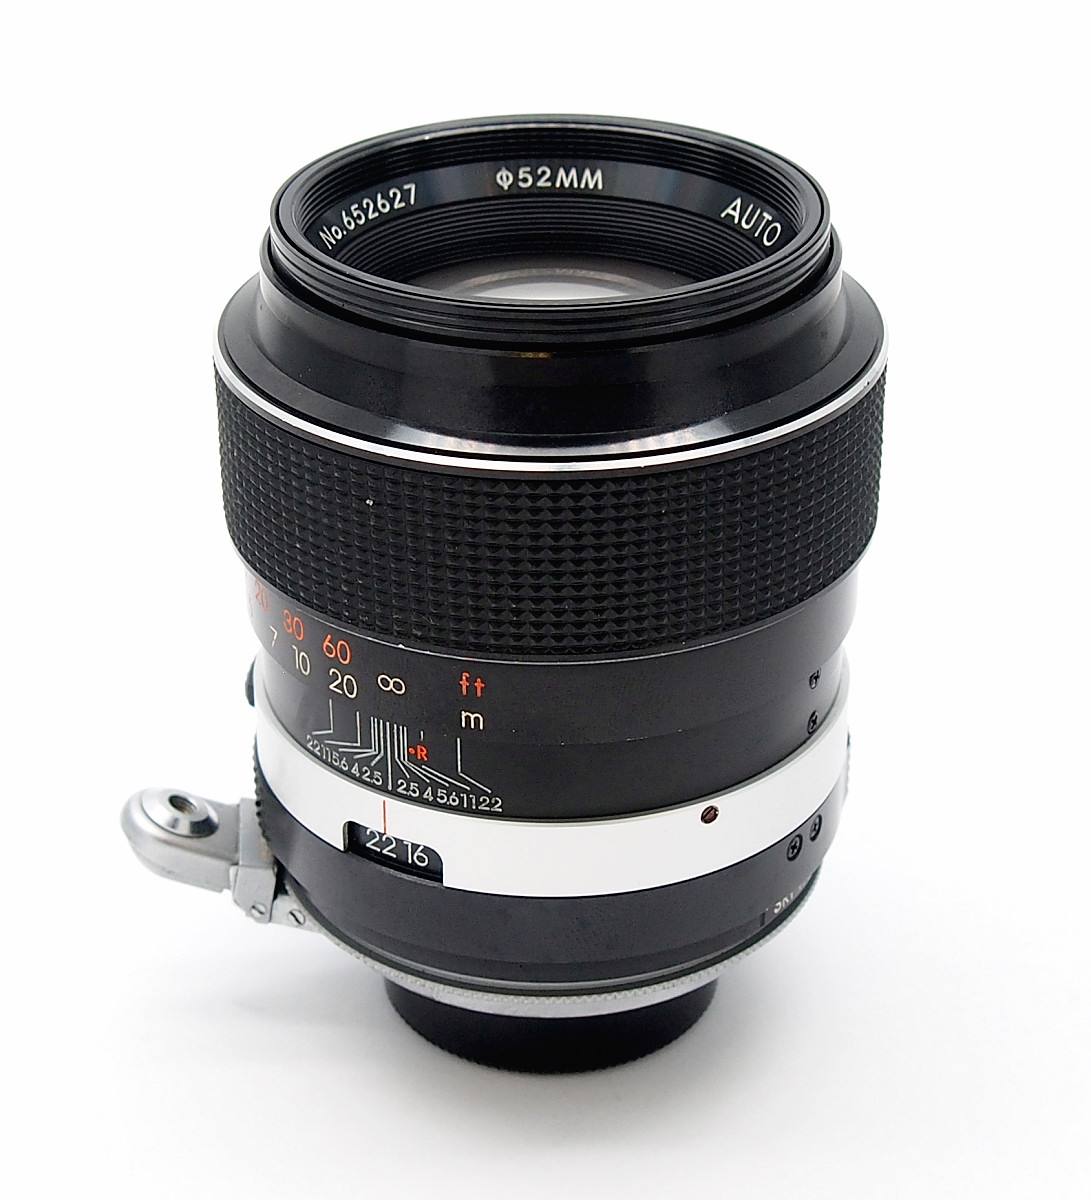 Tamron 105mm F2.5 Portrait Lens with Exakta Mount #8669